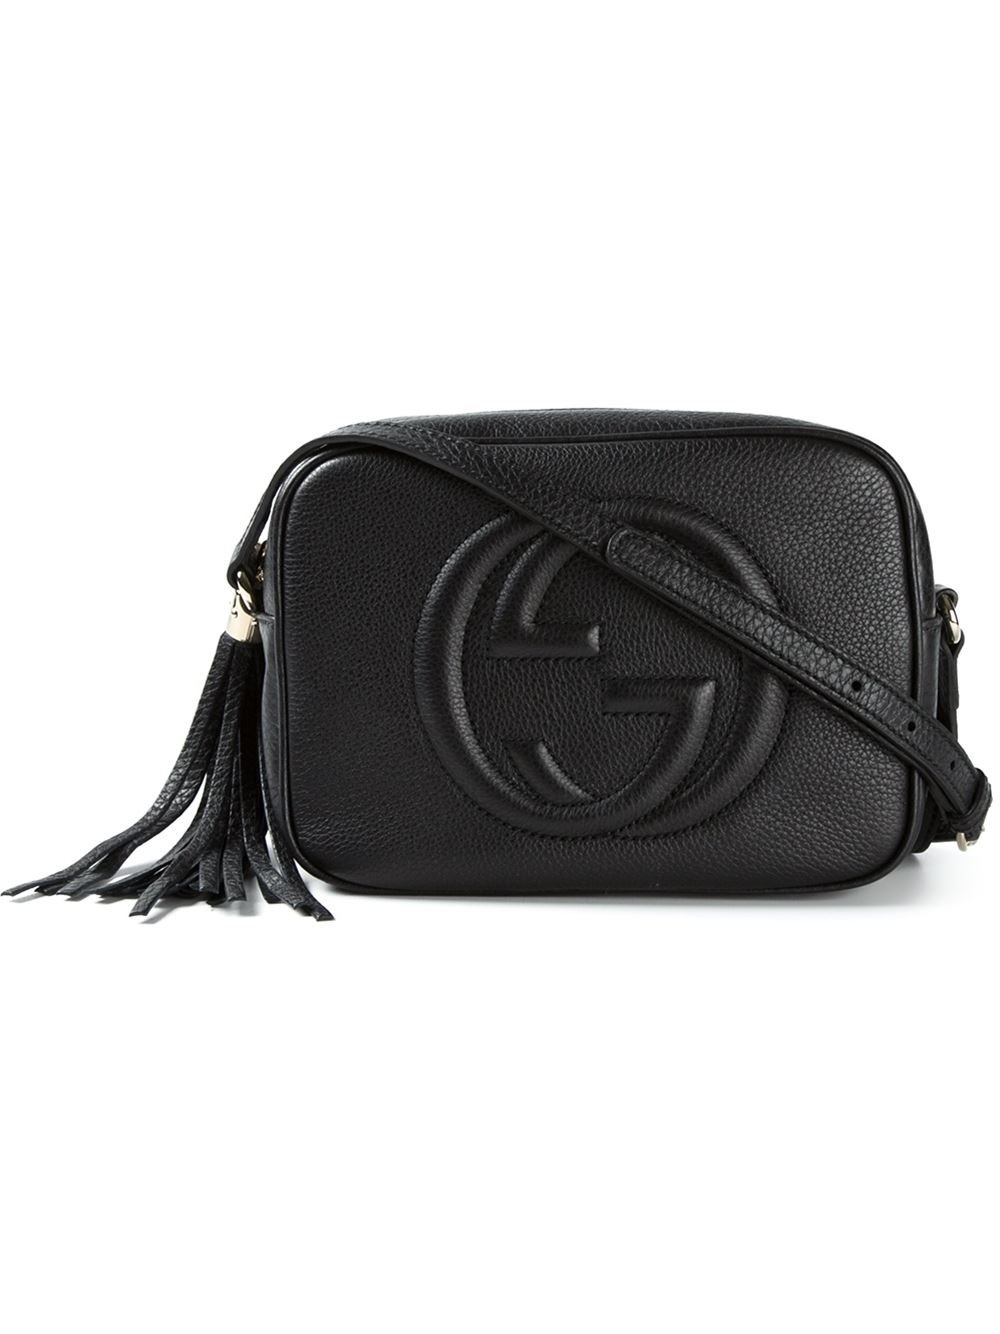 Gucci Soho Leather Cross-body Bag in Black